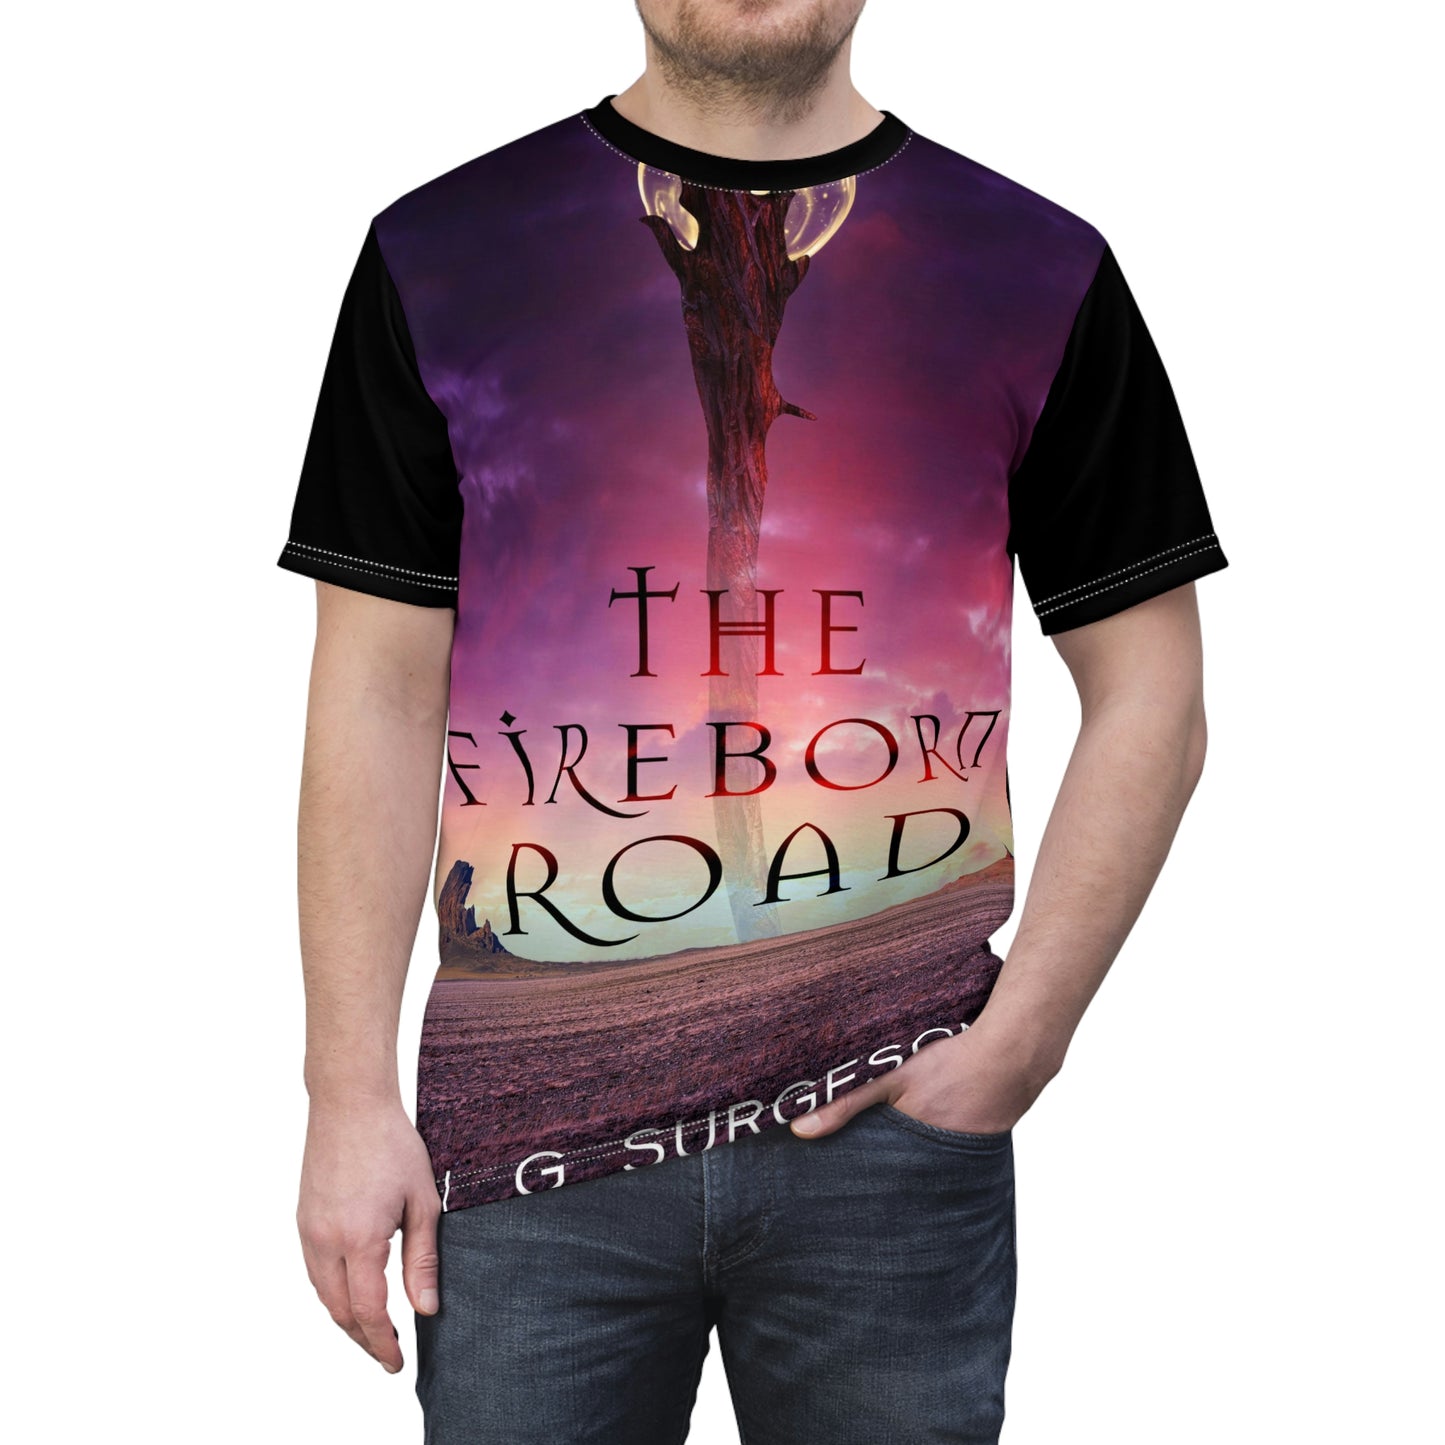 The Fireborn Road - Unisex All-Over Print Cut & Sew T-Shirt